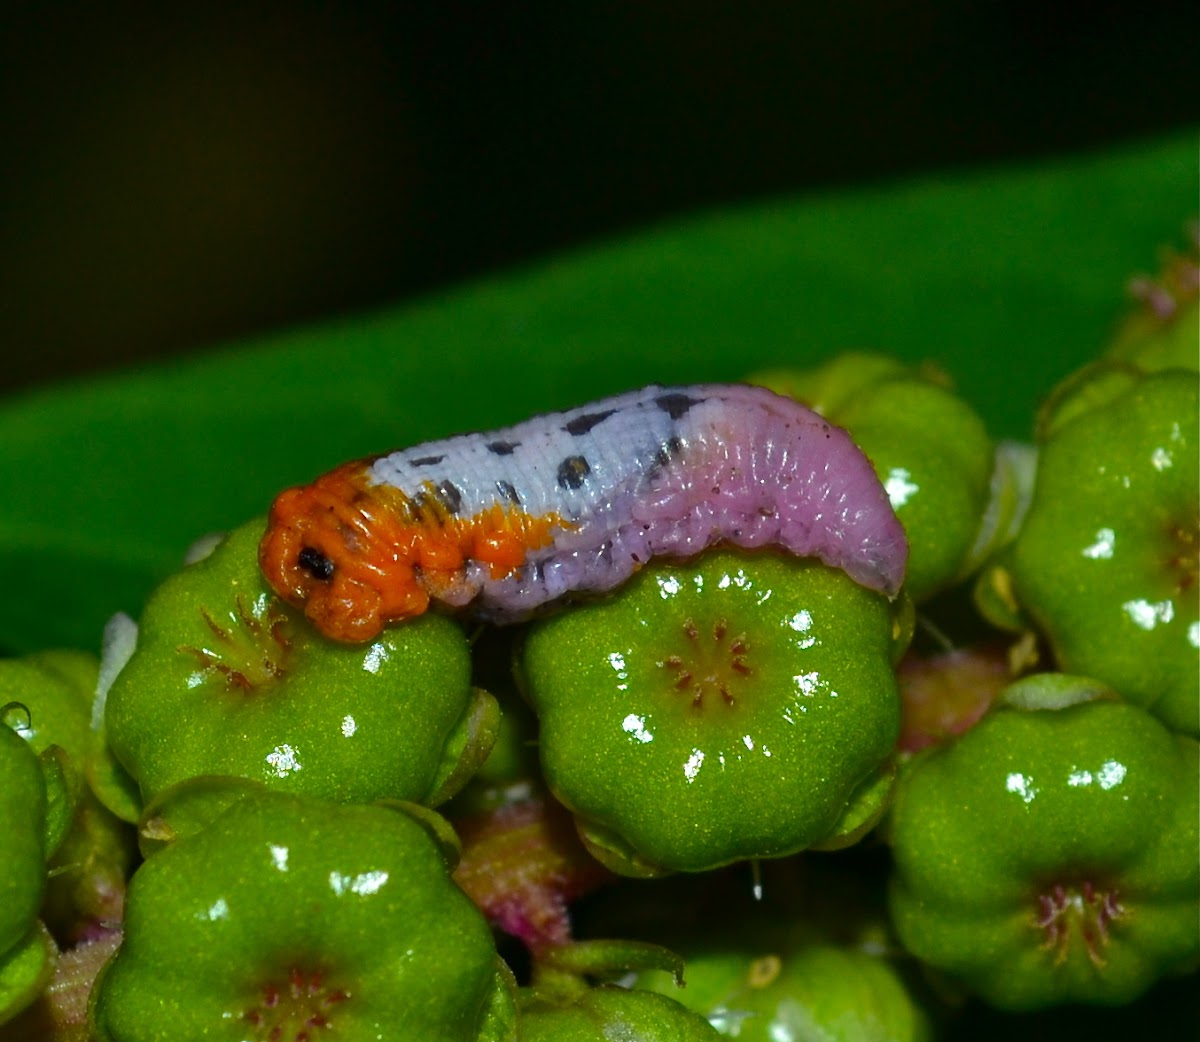 Hoverfly/Flower-fly larvae